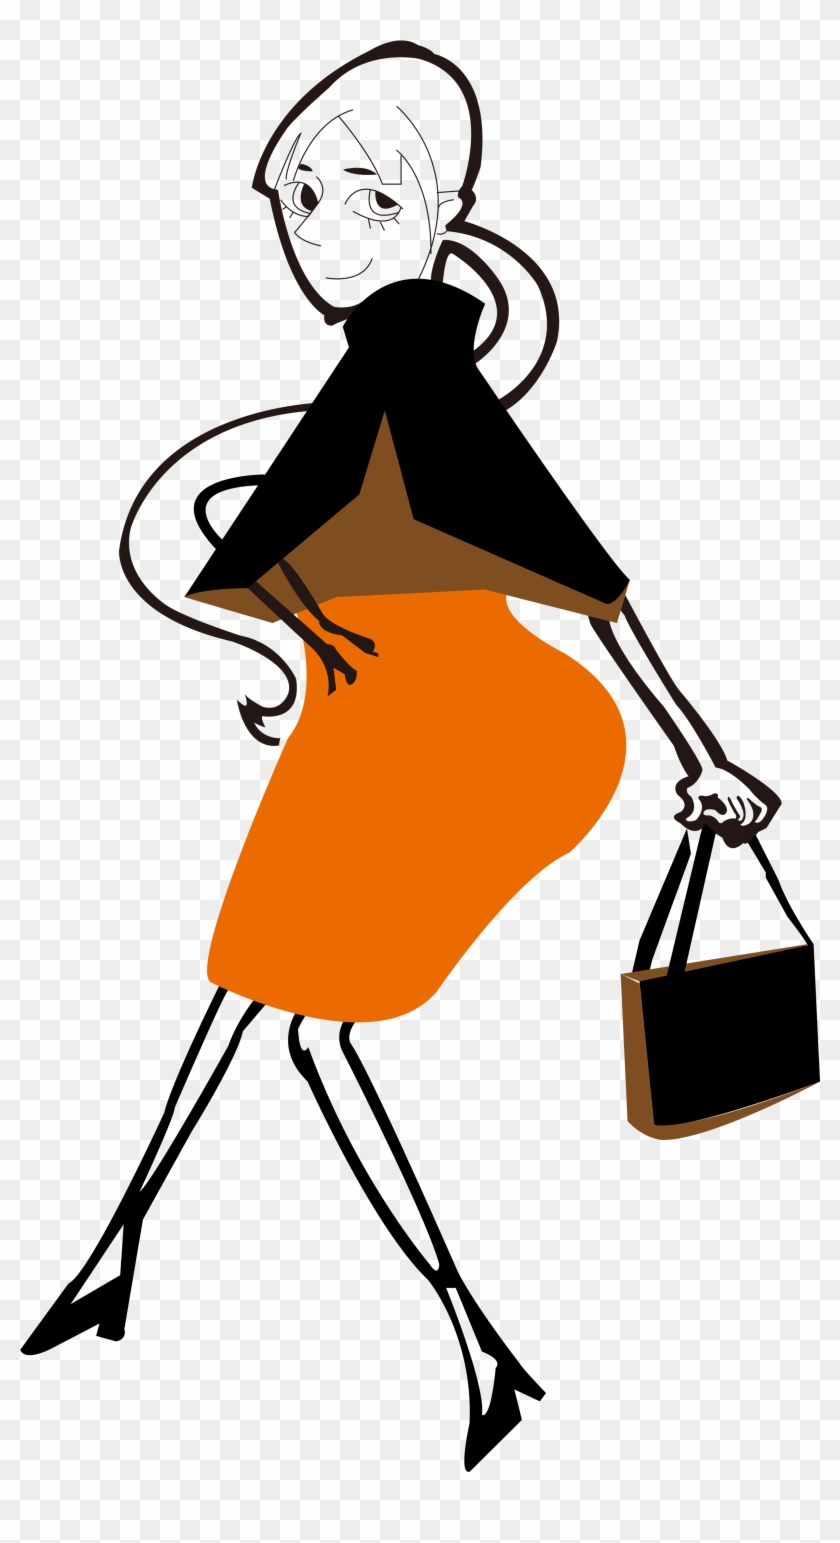 Cartoon Image Of A Woman Shopping - Cartoon Image Of A Woman Shopping #608164